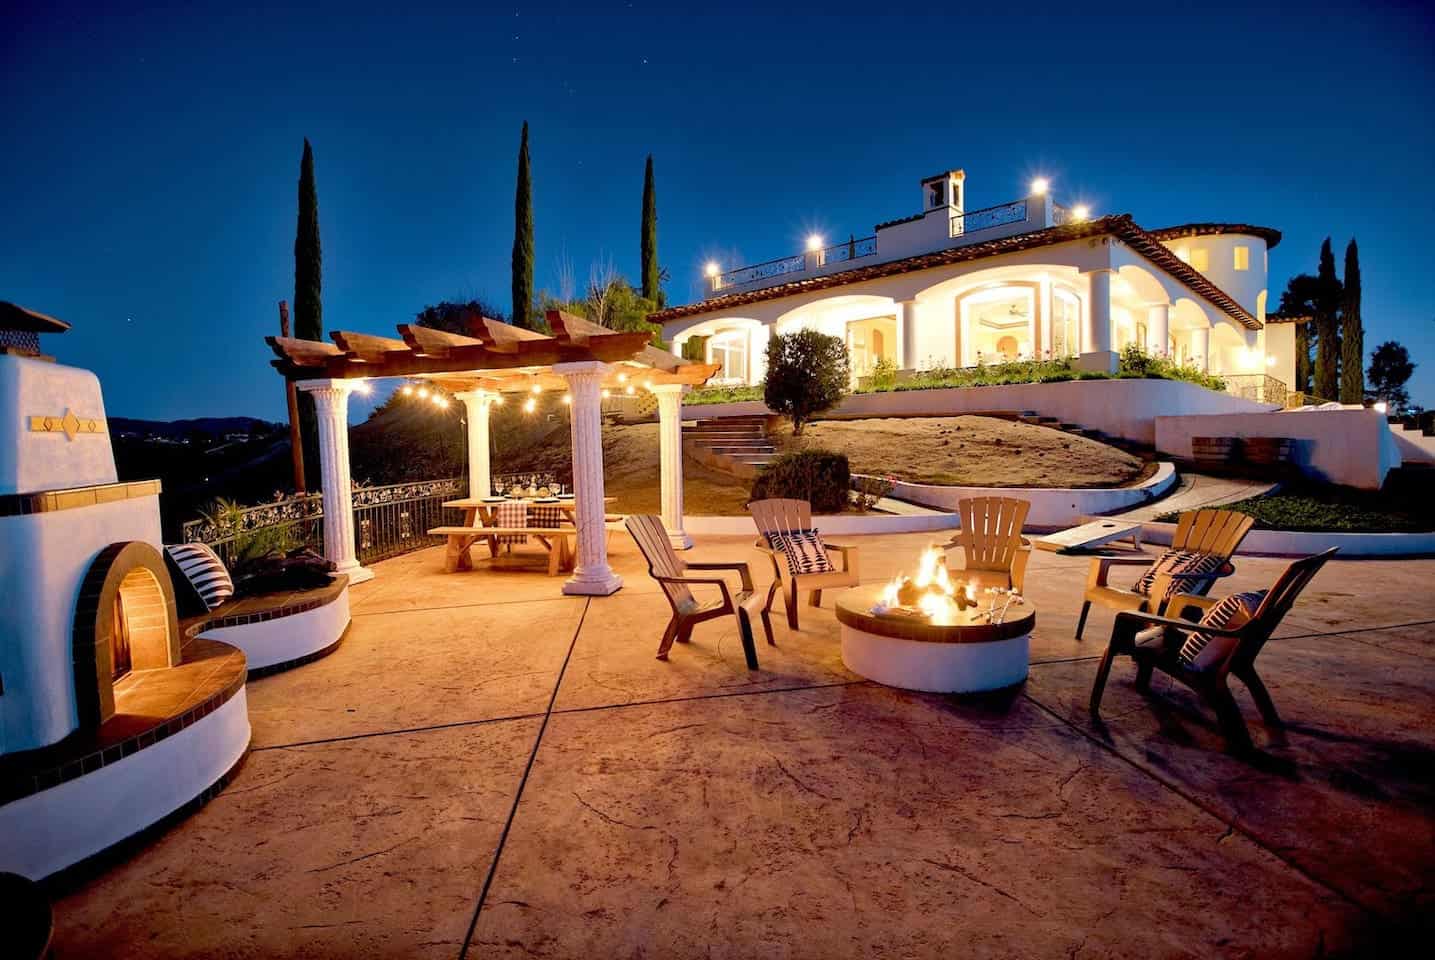 Image of Airbnb rental in Temecula, California